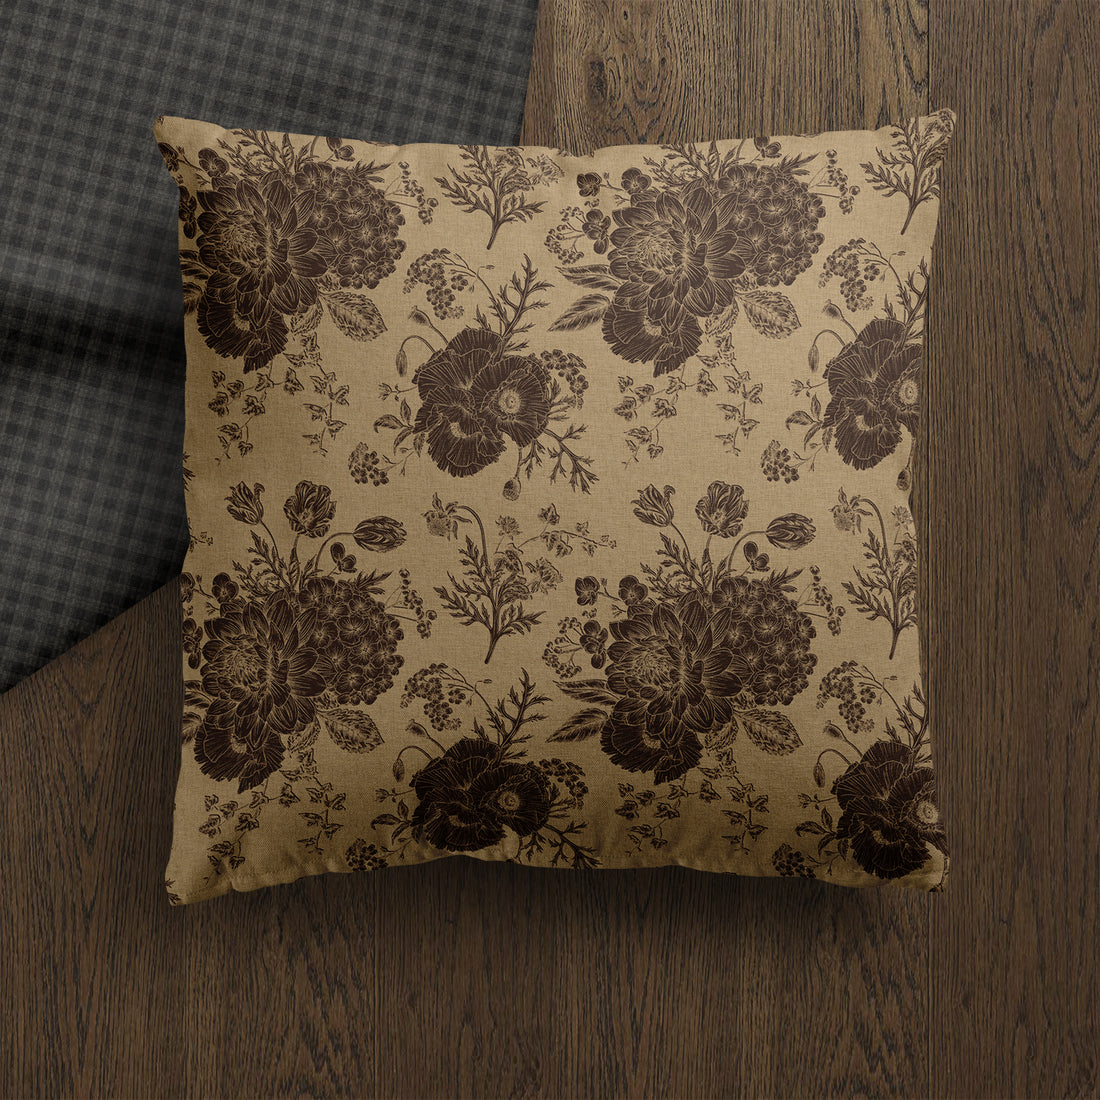 Thalassa | Vintage Style Floral Throw Pillow Cover